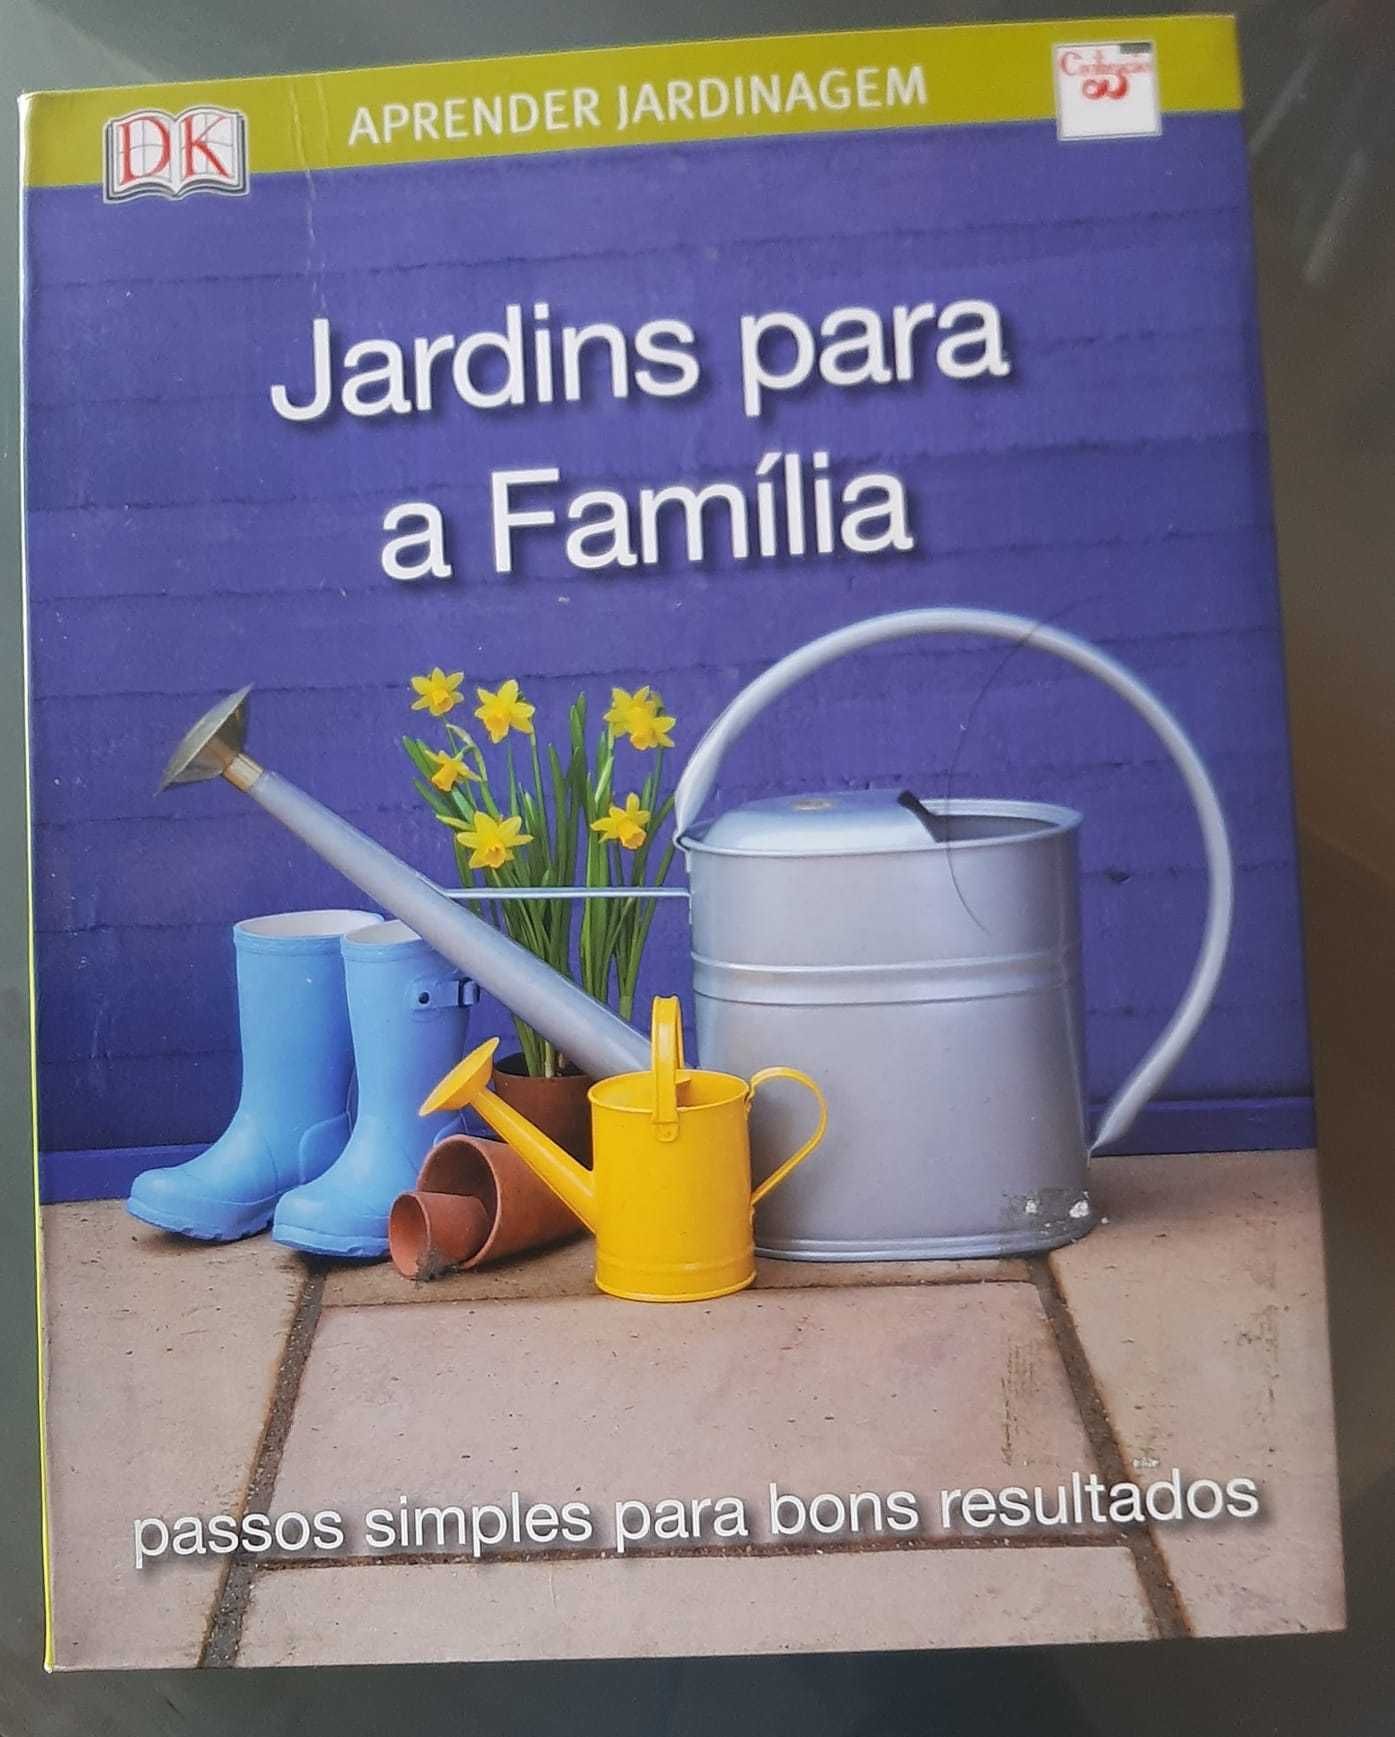 Jardins para a Família - Aprender Jardinagem